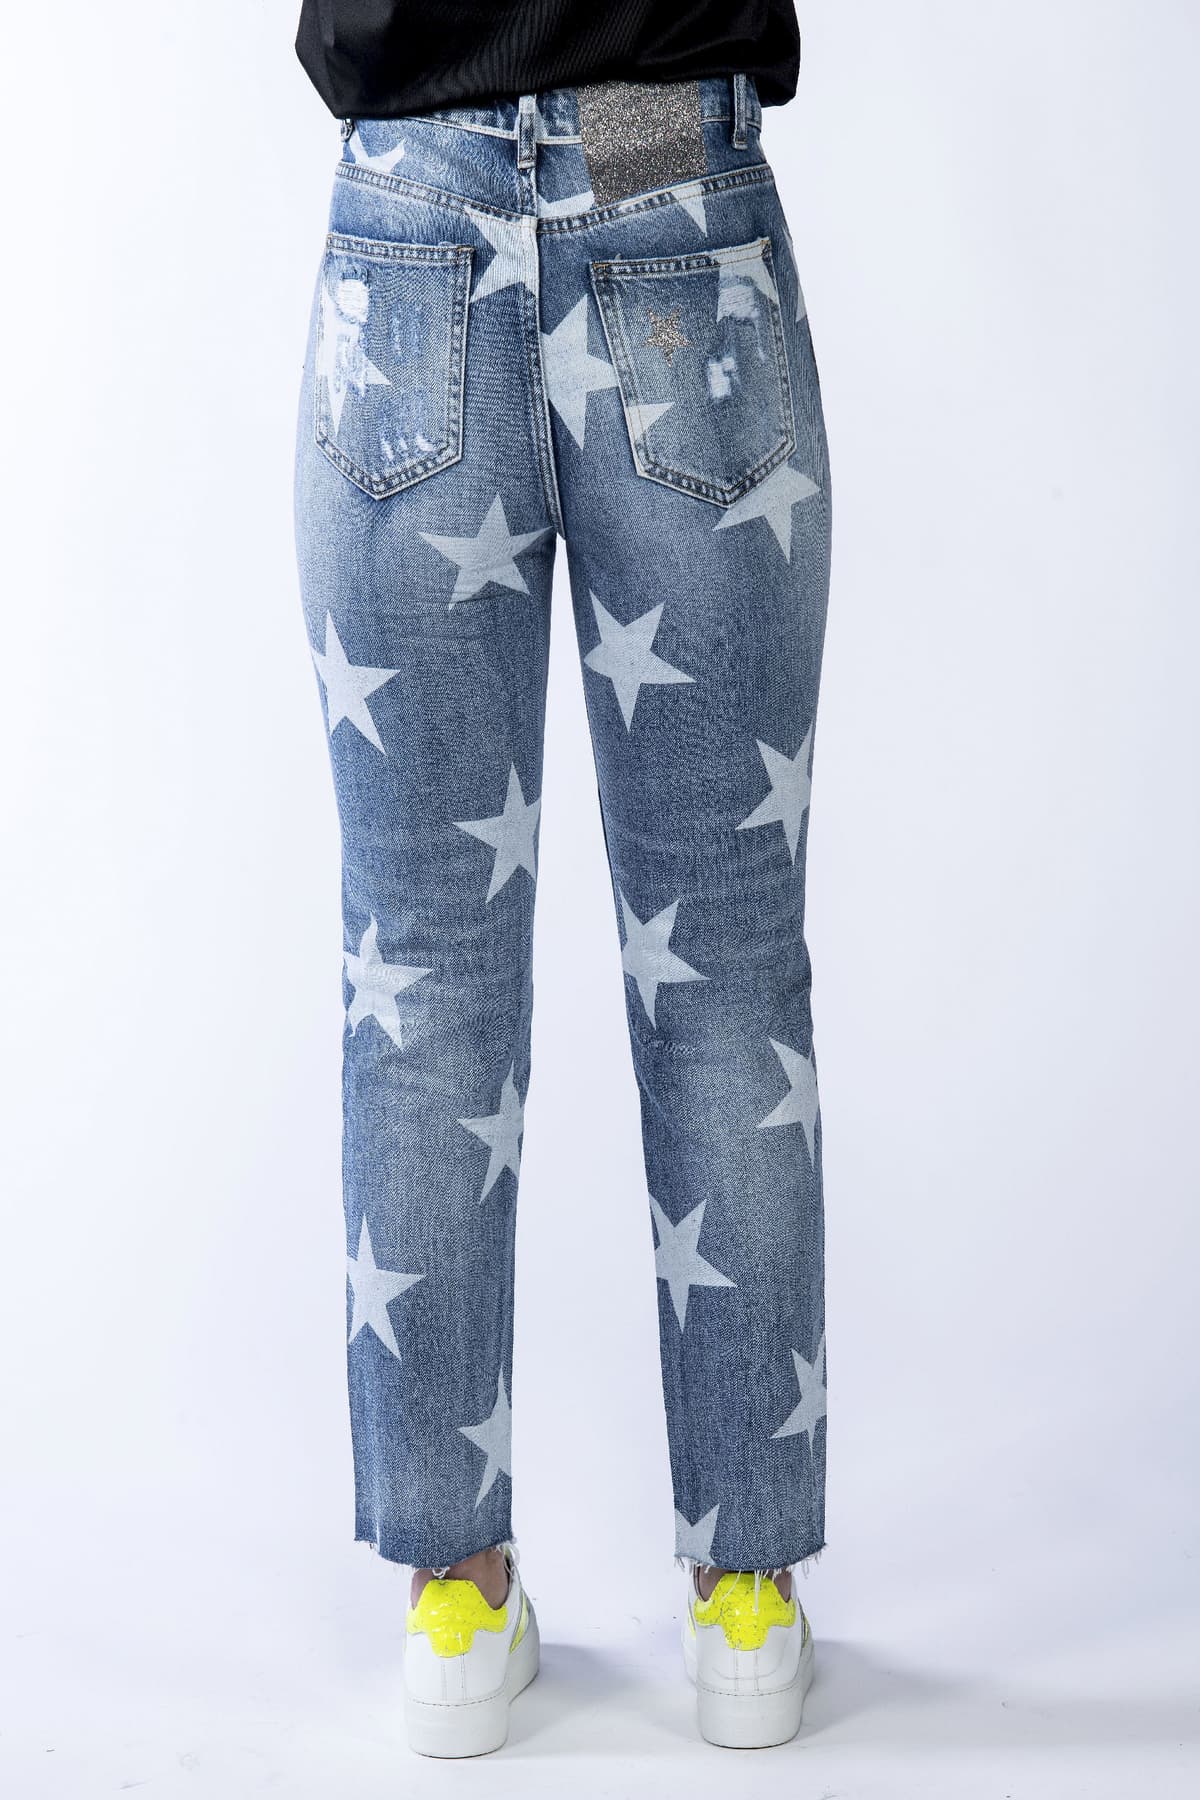 HEXIS women's fringed jeans